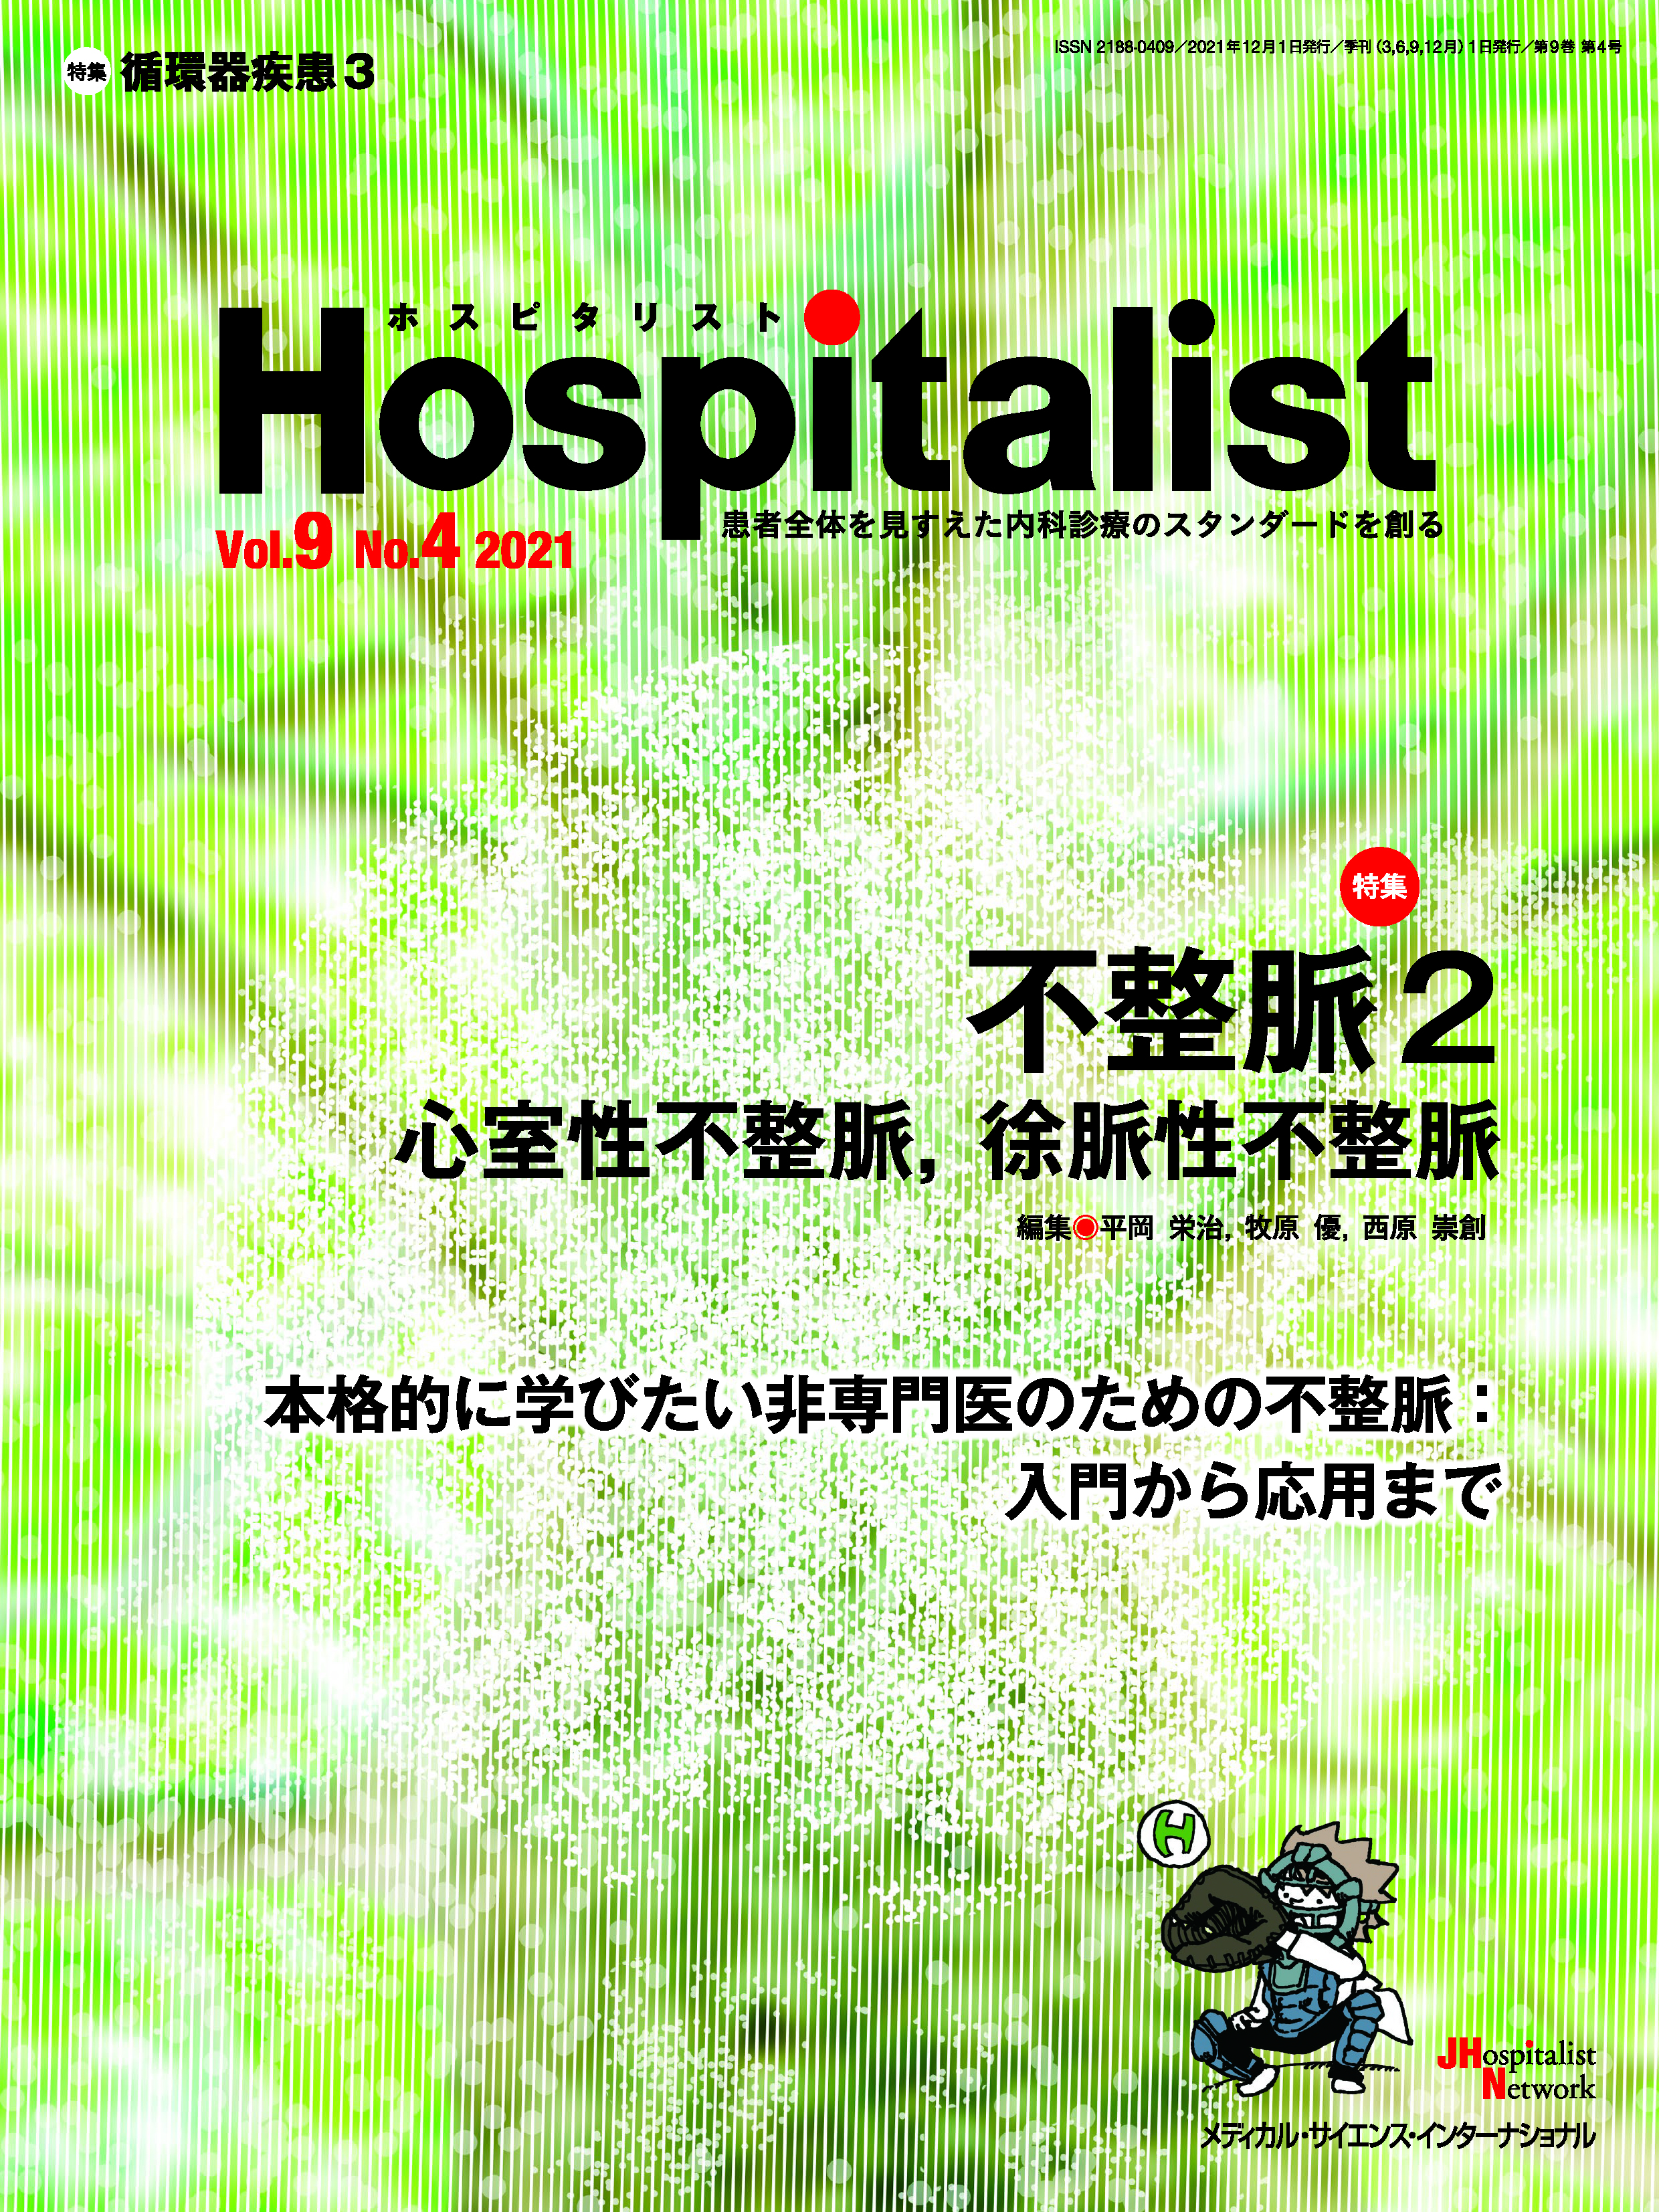 Hospitalist(ホスピタリスト) Vol.4 No.2 2016(特集:周術期マネジメント) [雑誌] 平岡栄治